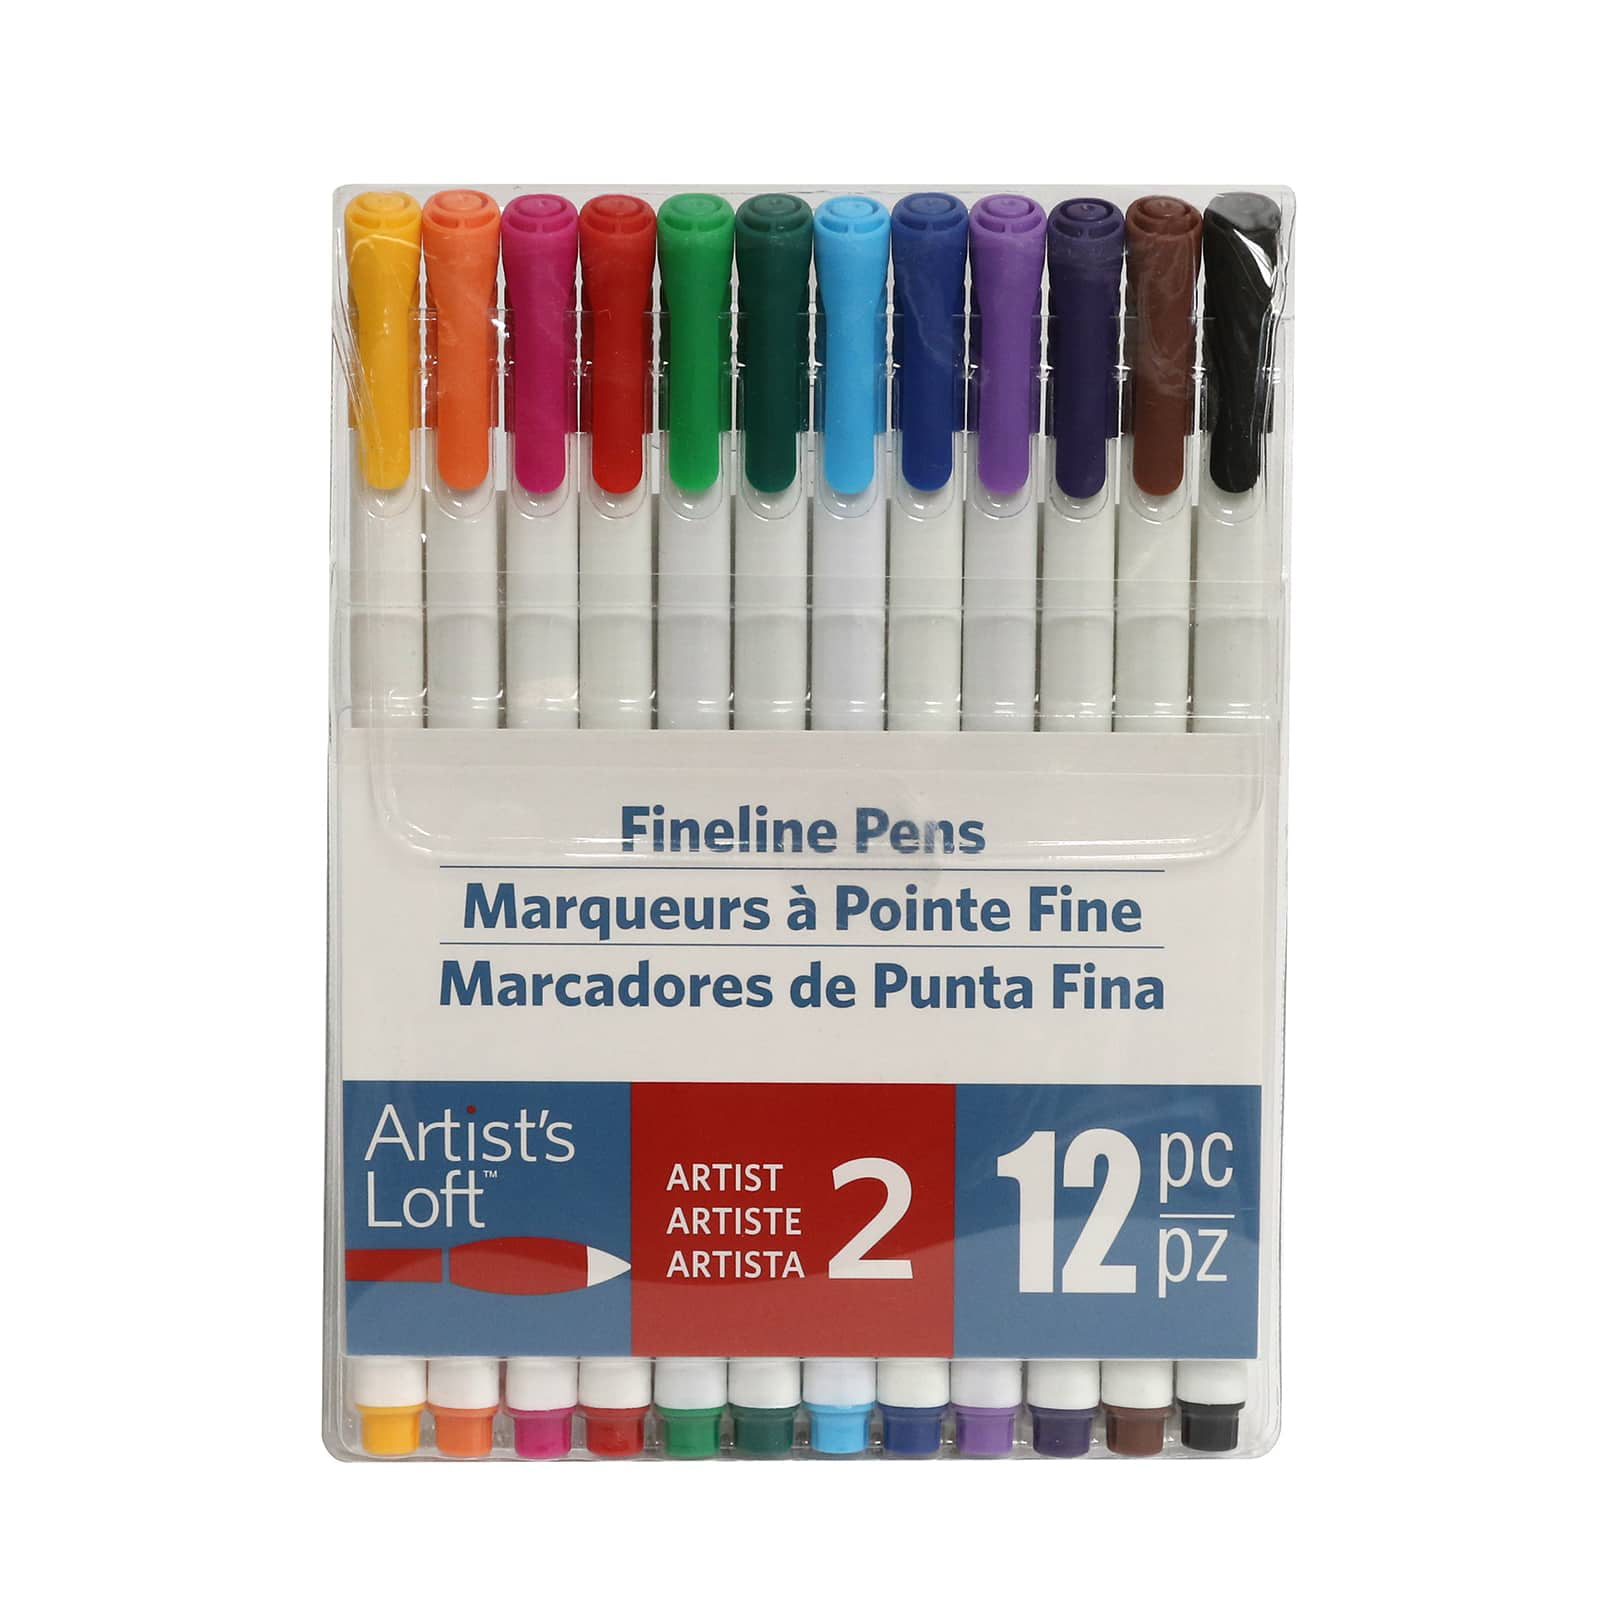 Manga Liner Paint Pen Fine Tip (Various Colors) – The Net Loft Traditional  Handcrafts